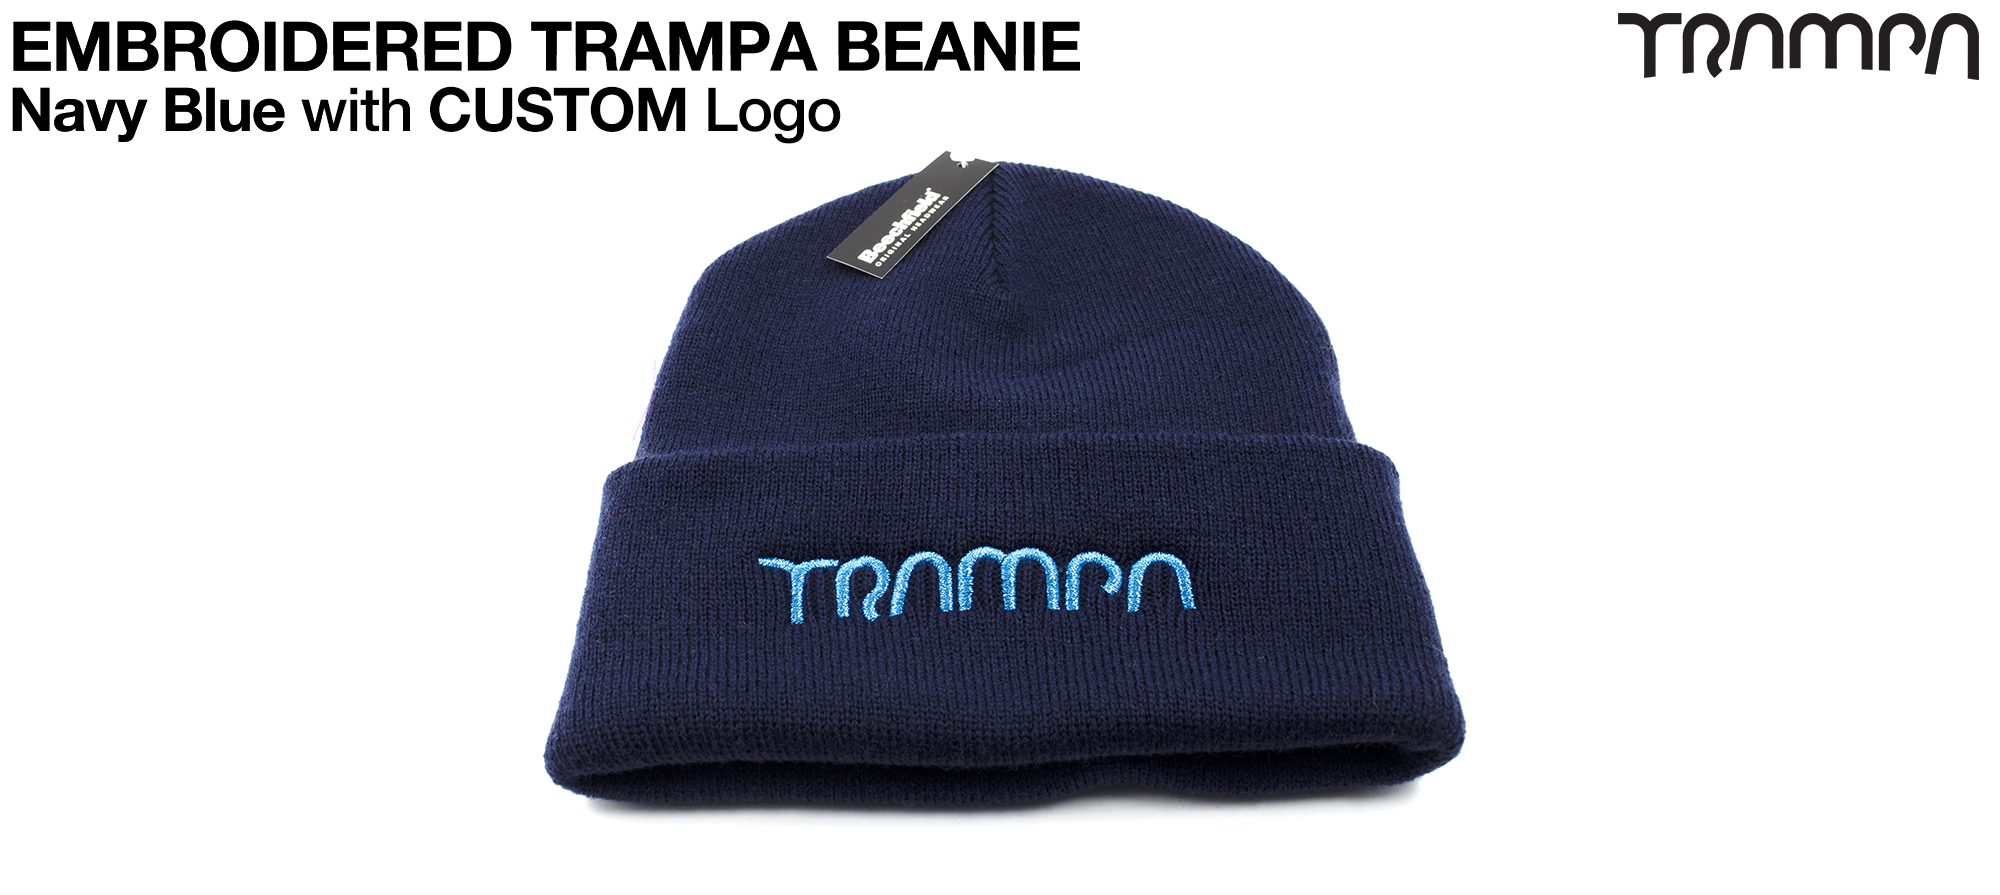 Navy BLUE Beanie with Black TRAMPA logo 